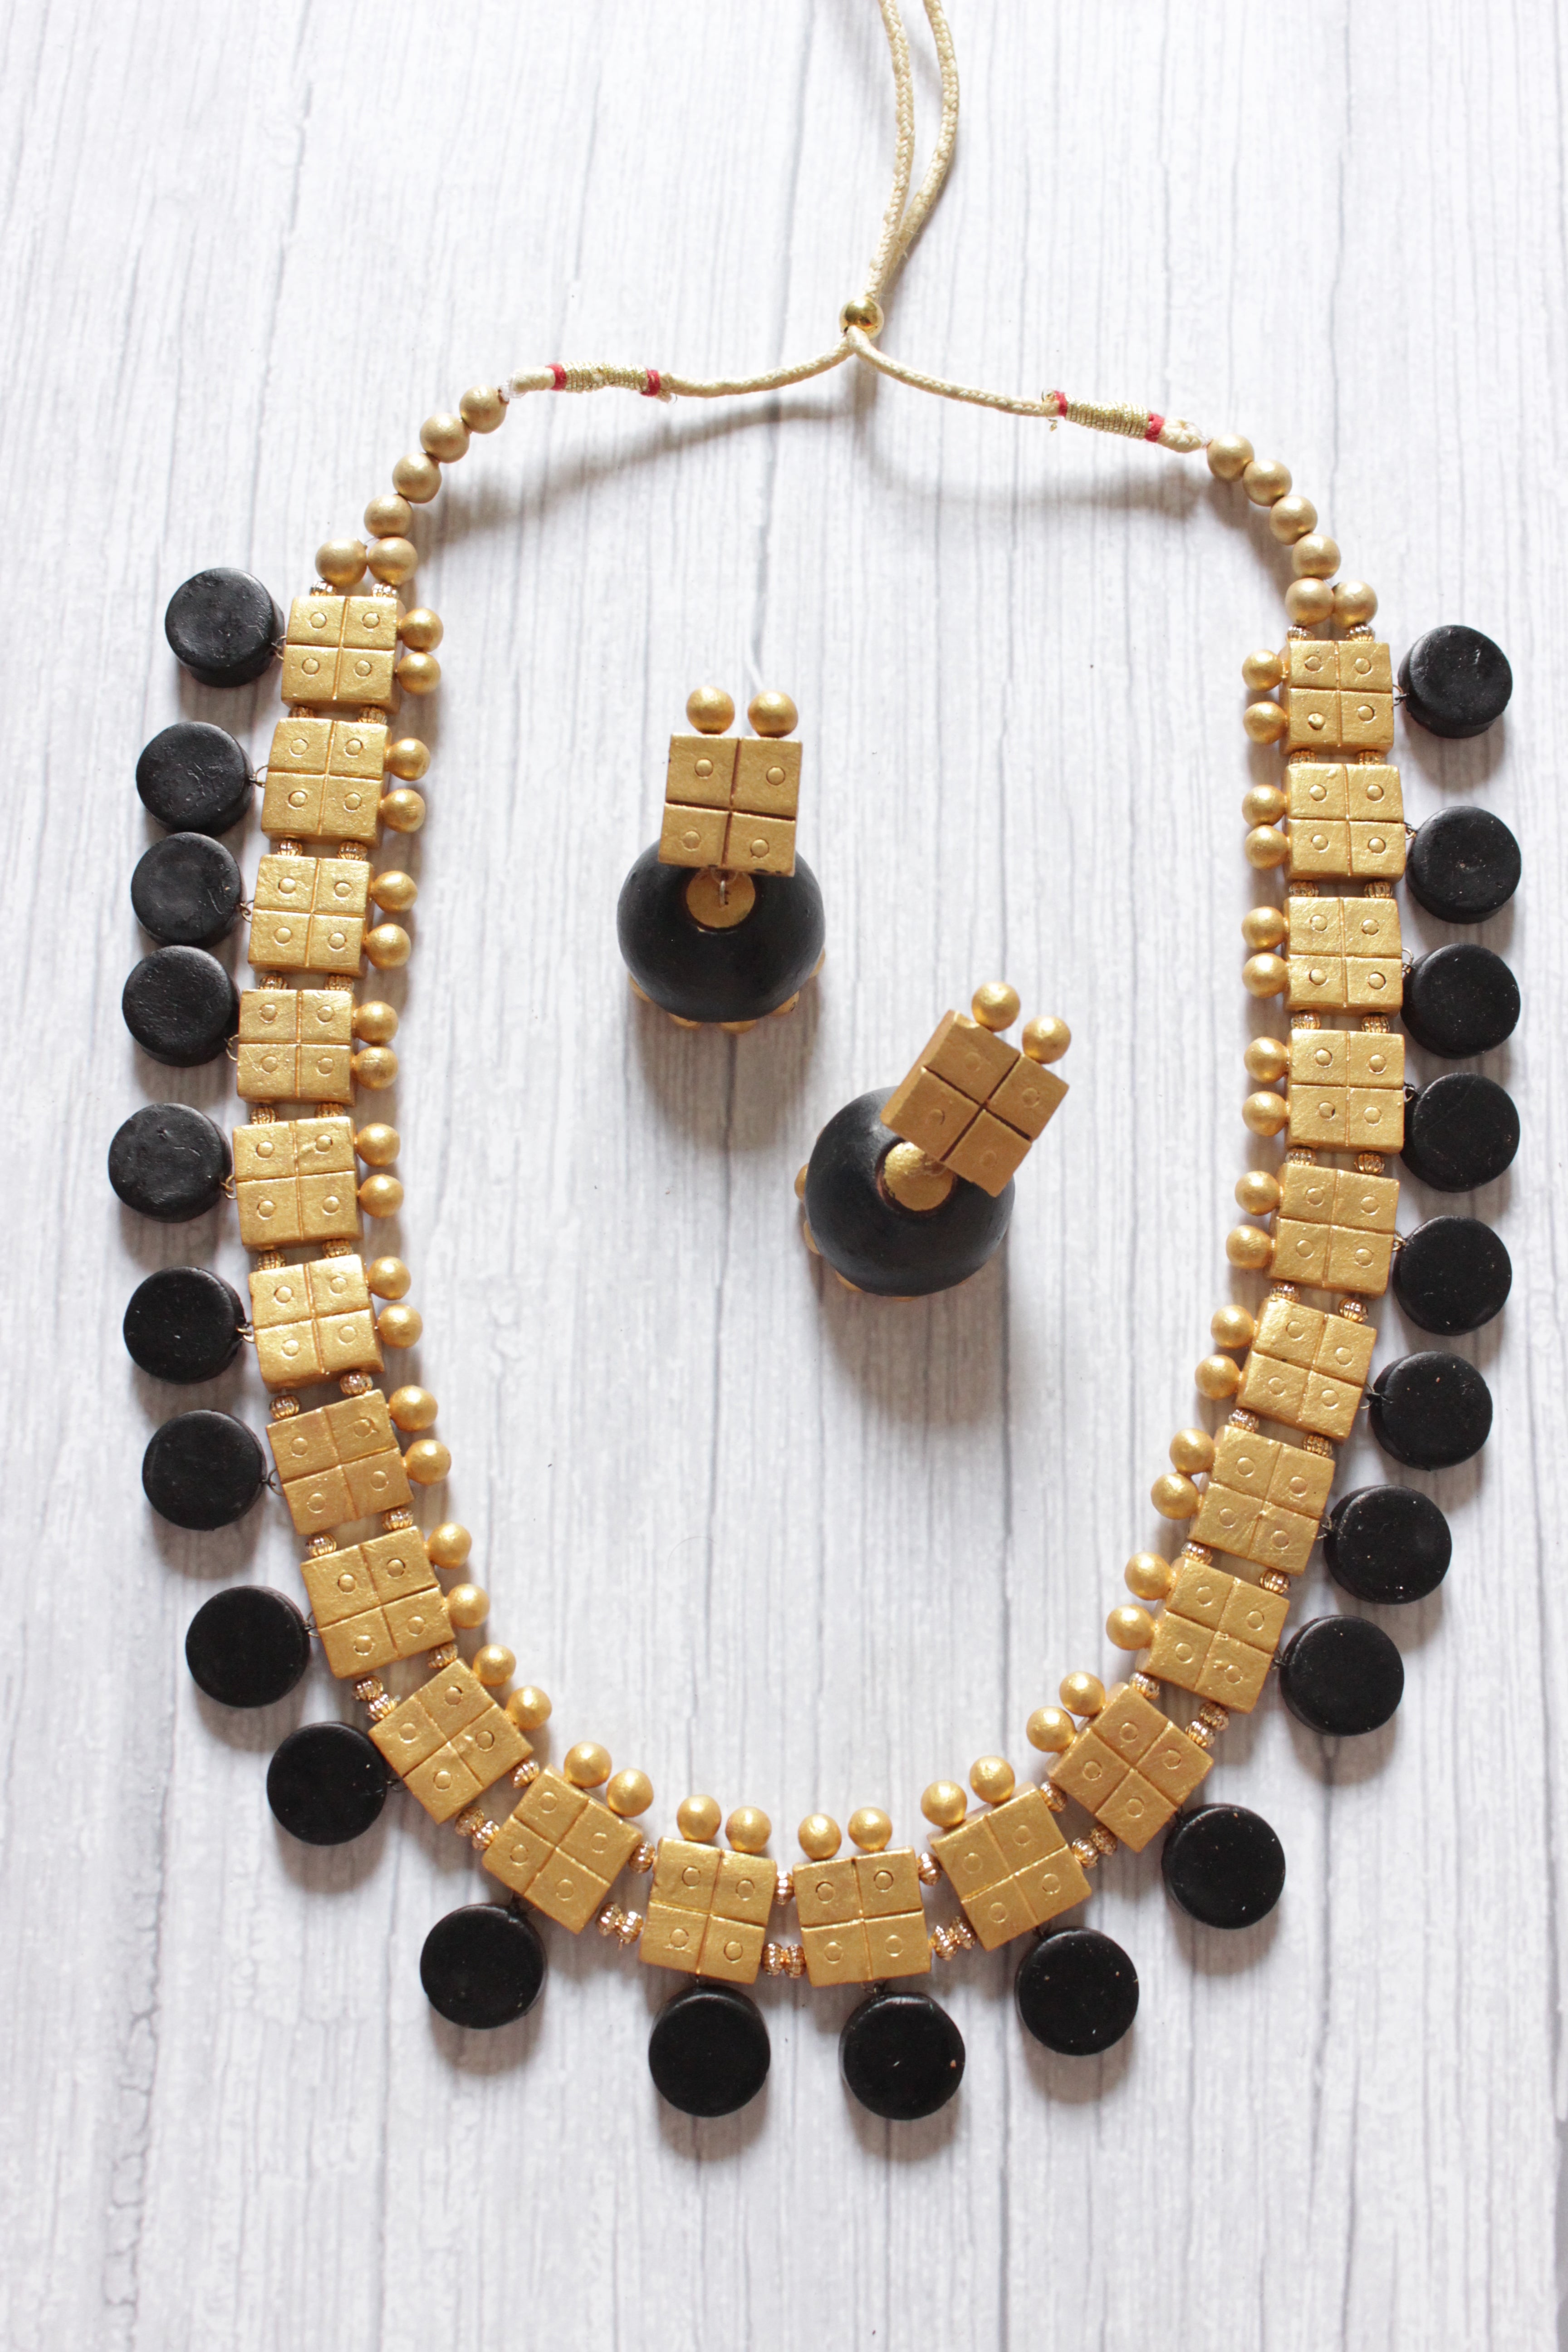 Black & Golden Geometric Shapes Choker Style Terracotta Clay Necklace Set